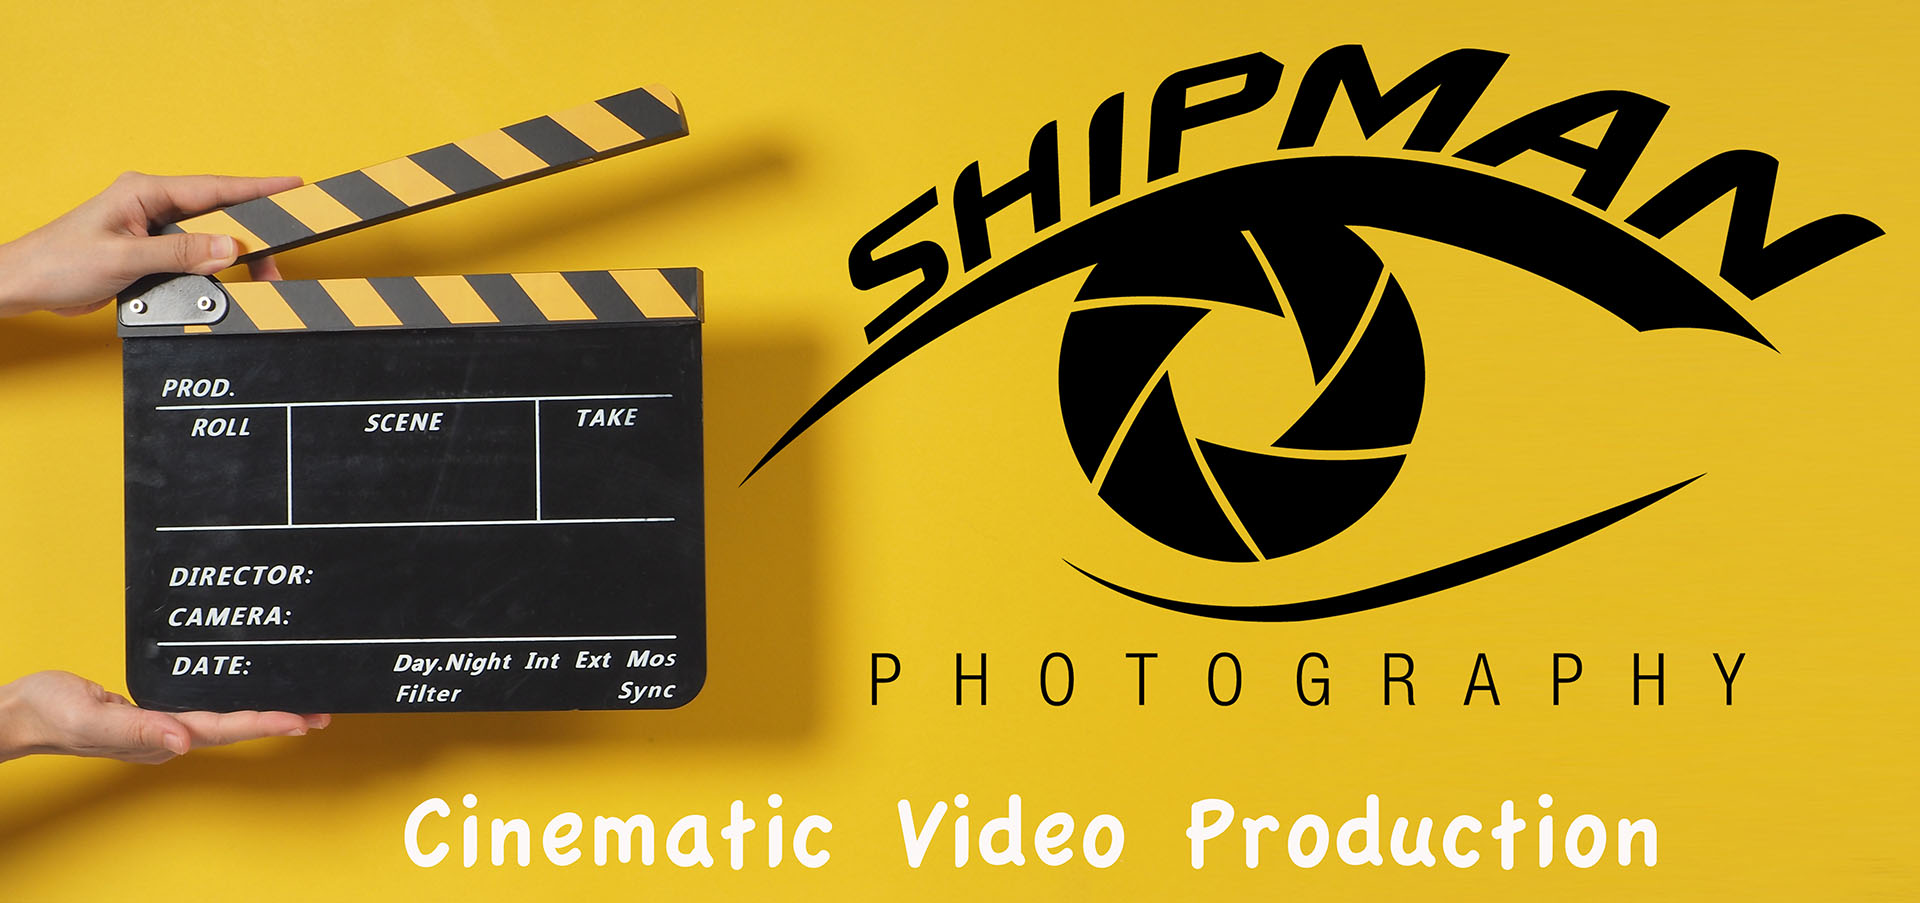 gregg shipman photography video production logo